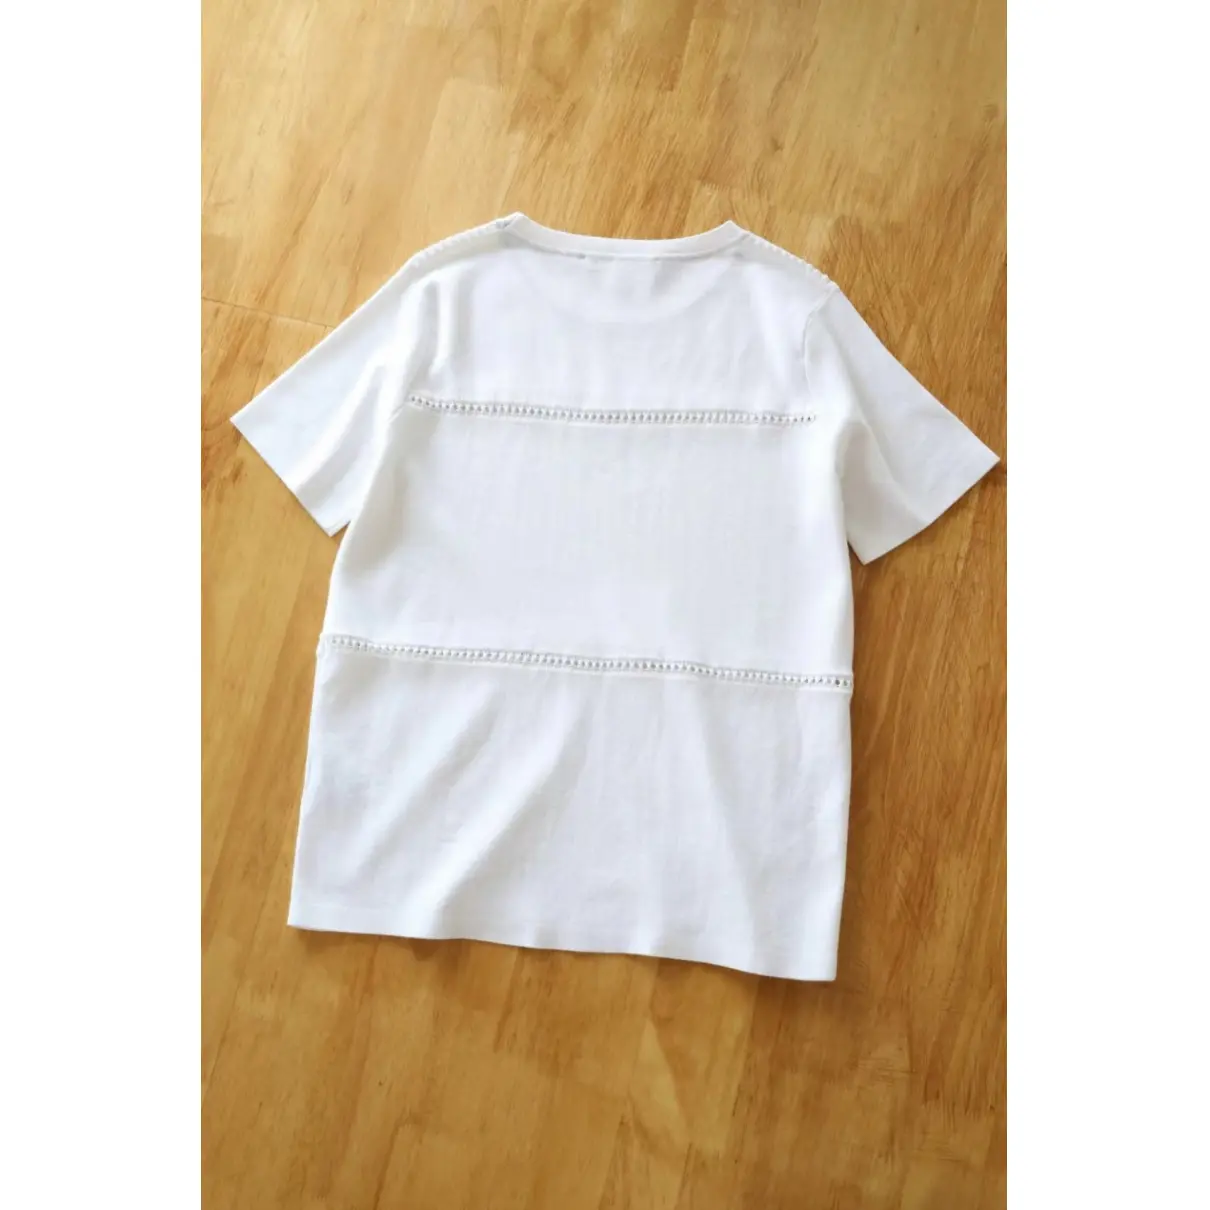 Buy Loro Piana White Cotton Top online